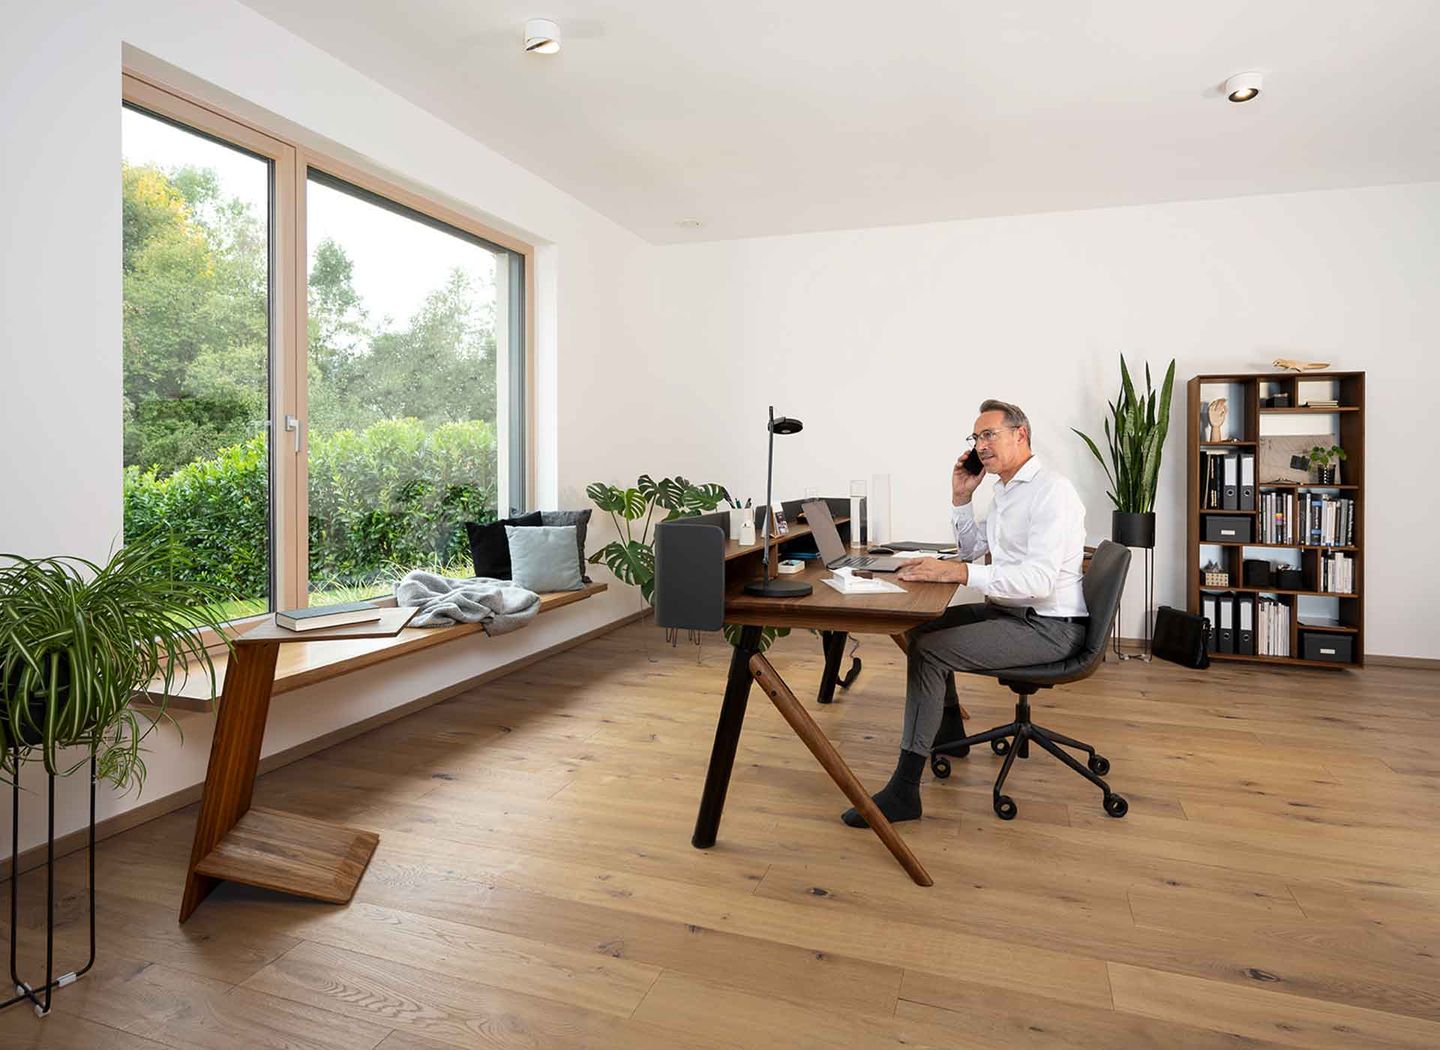 Height adjustable pisa desk for sitting use